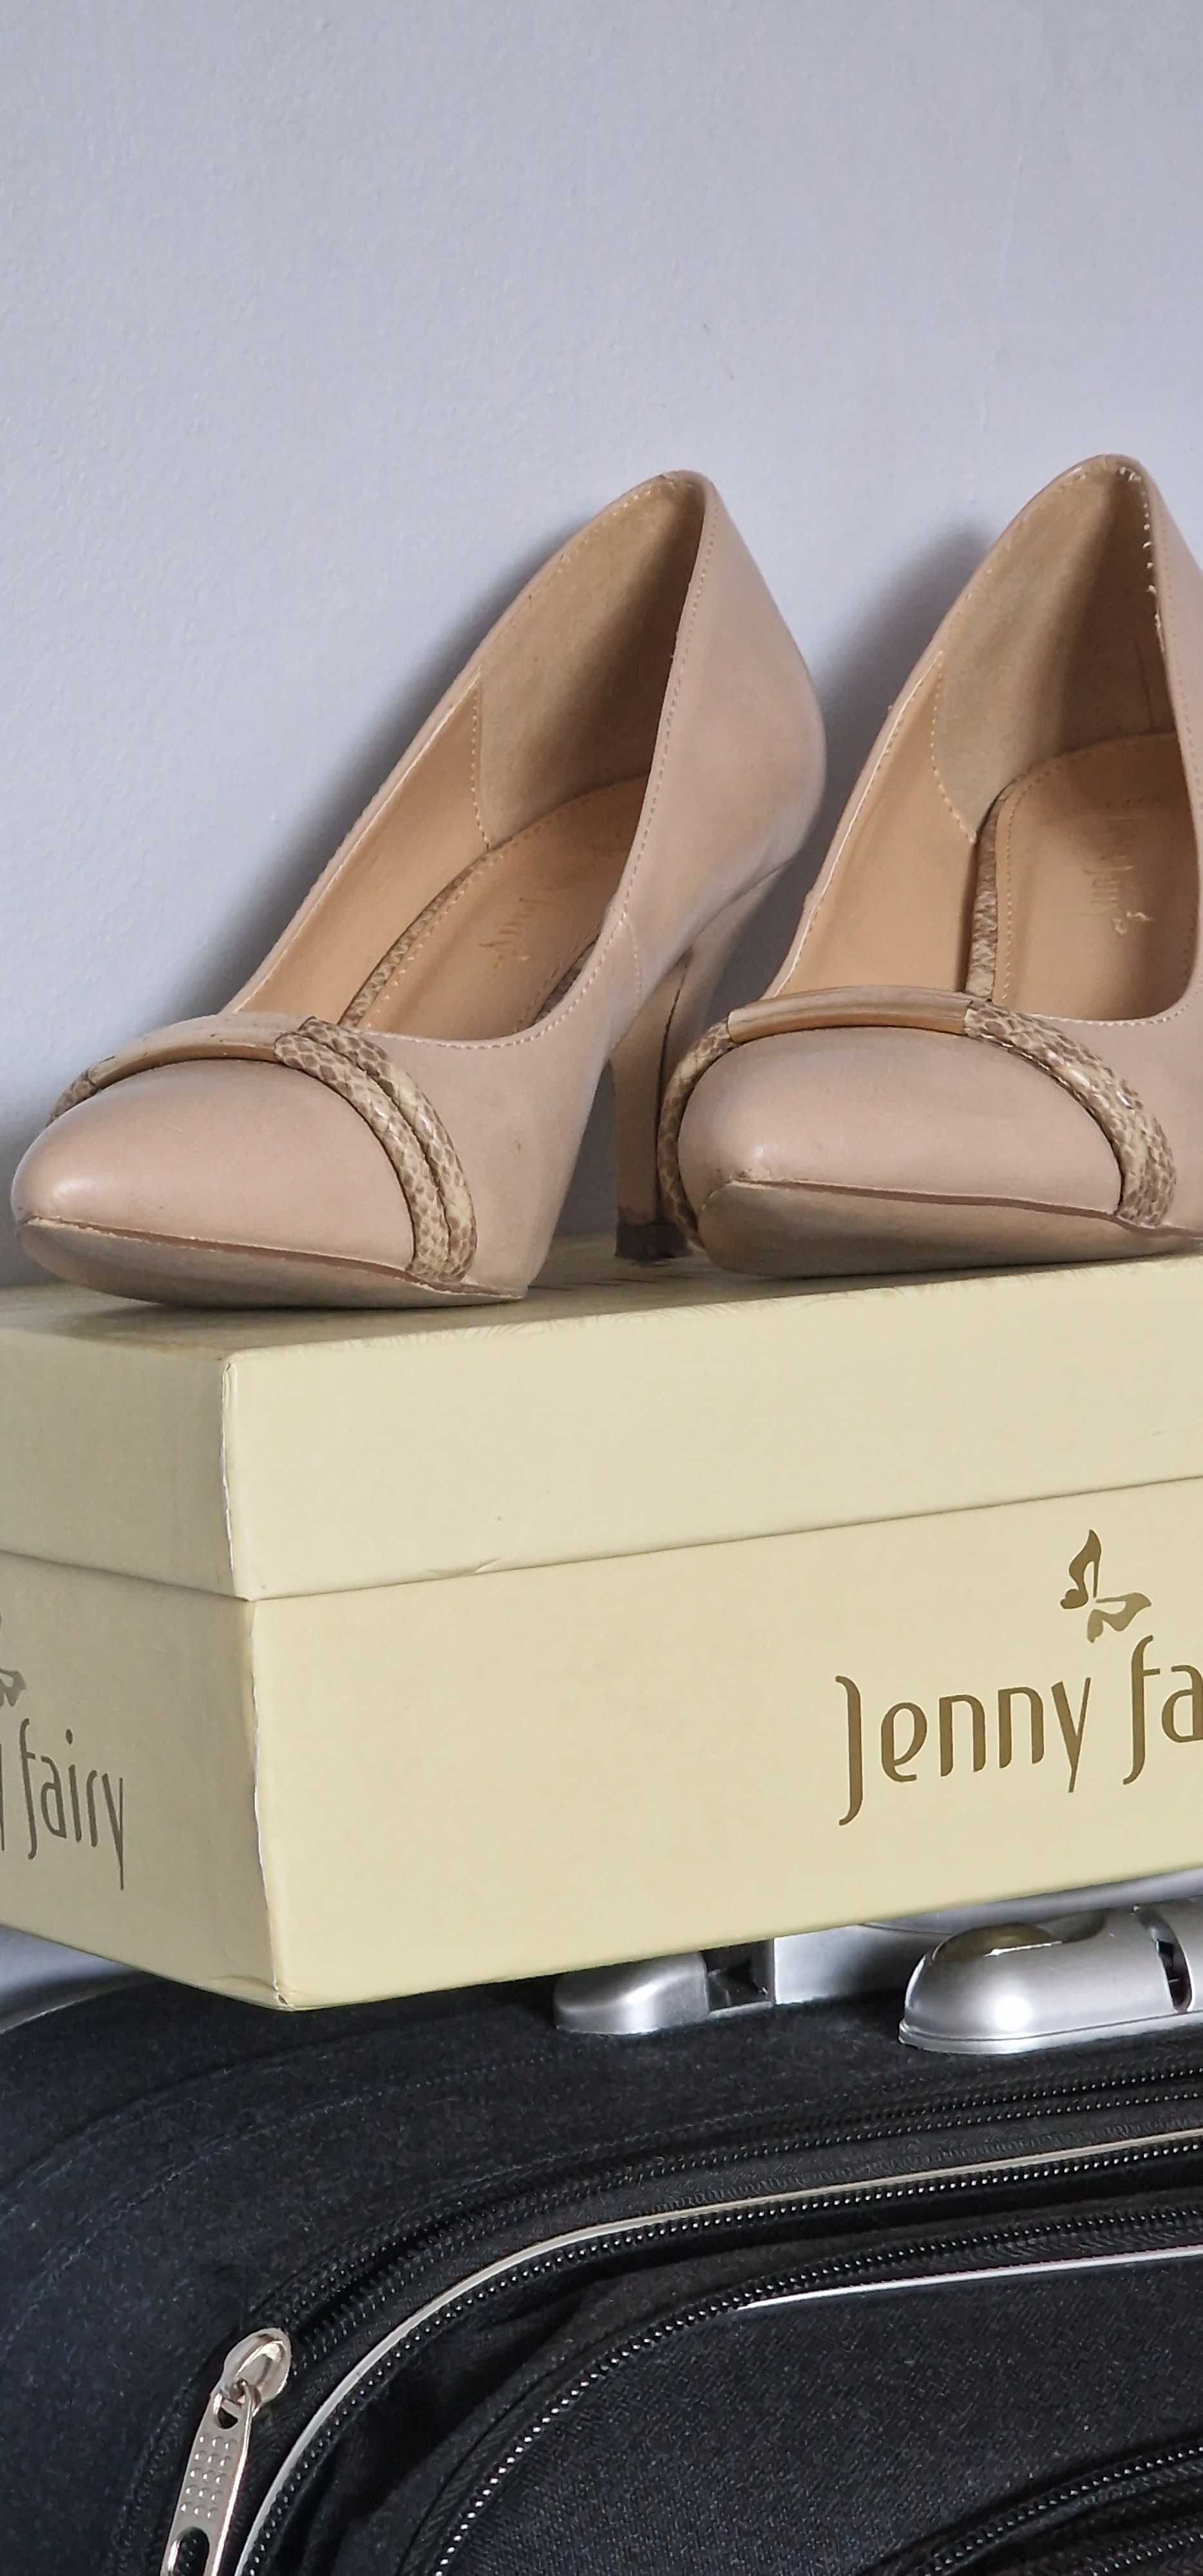 Szpilki Jenny Fairy 37